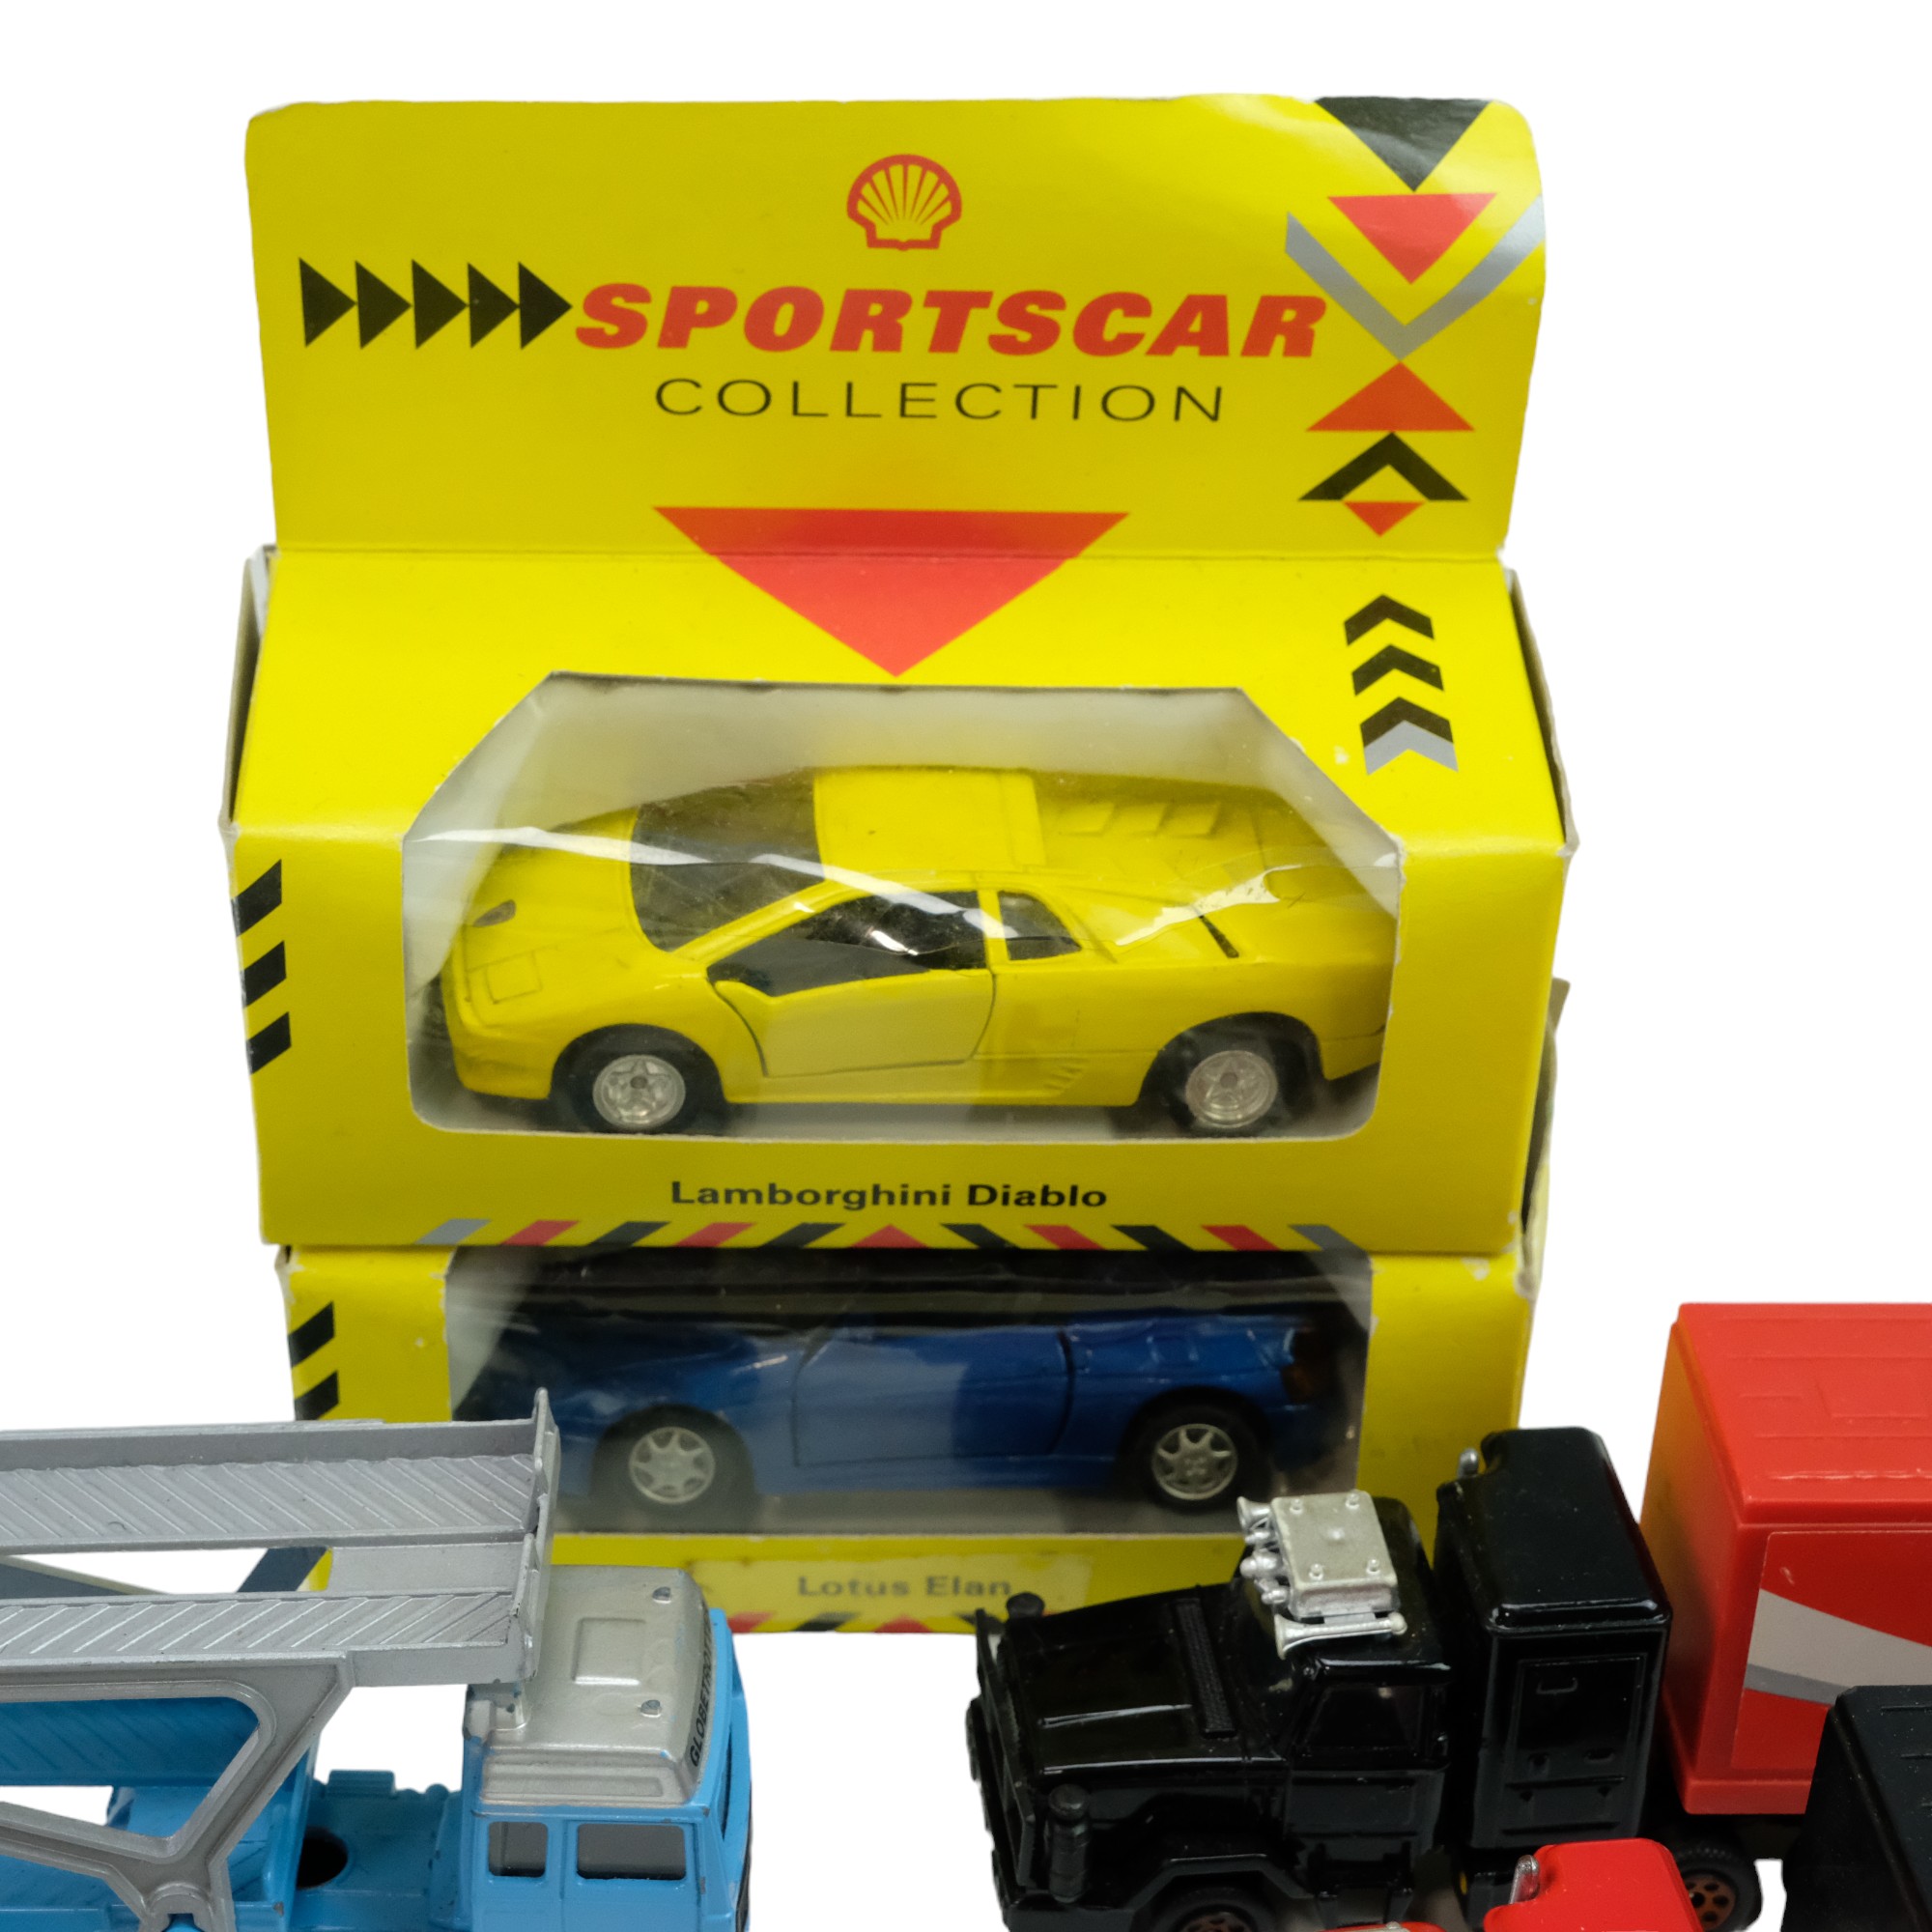 Corgi and Matchbox diecast model cars and wagons including a Coca-Cola wagon, play-worn - Bild 2 aus 4